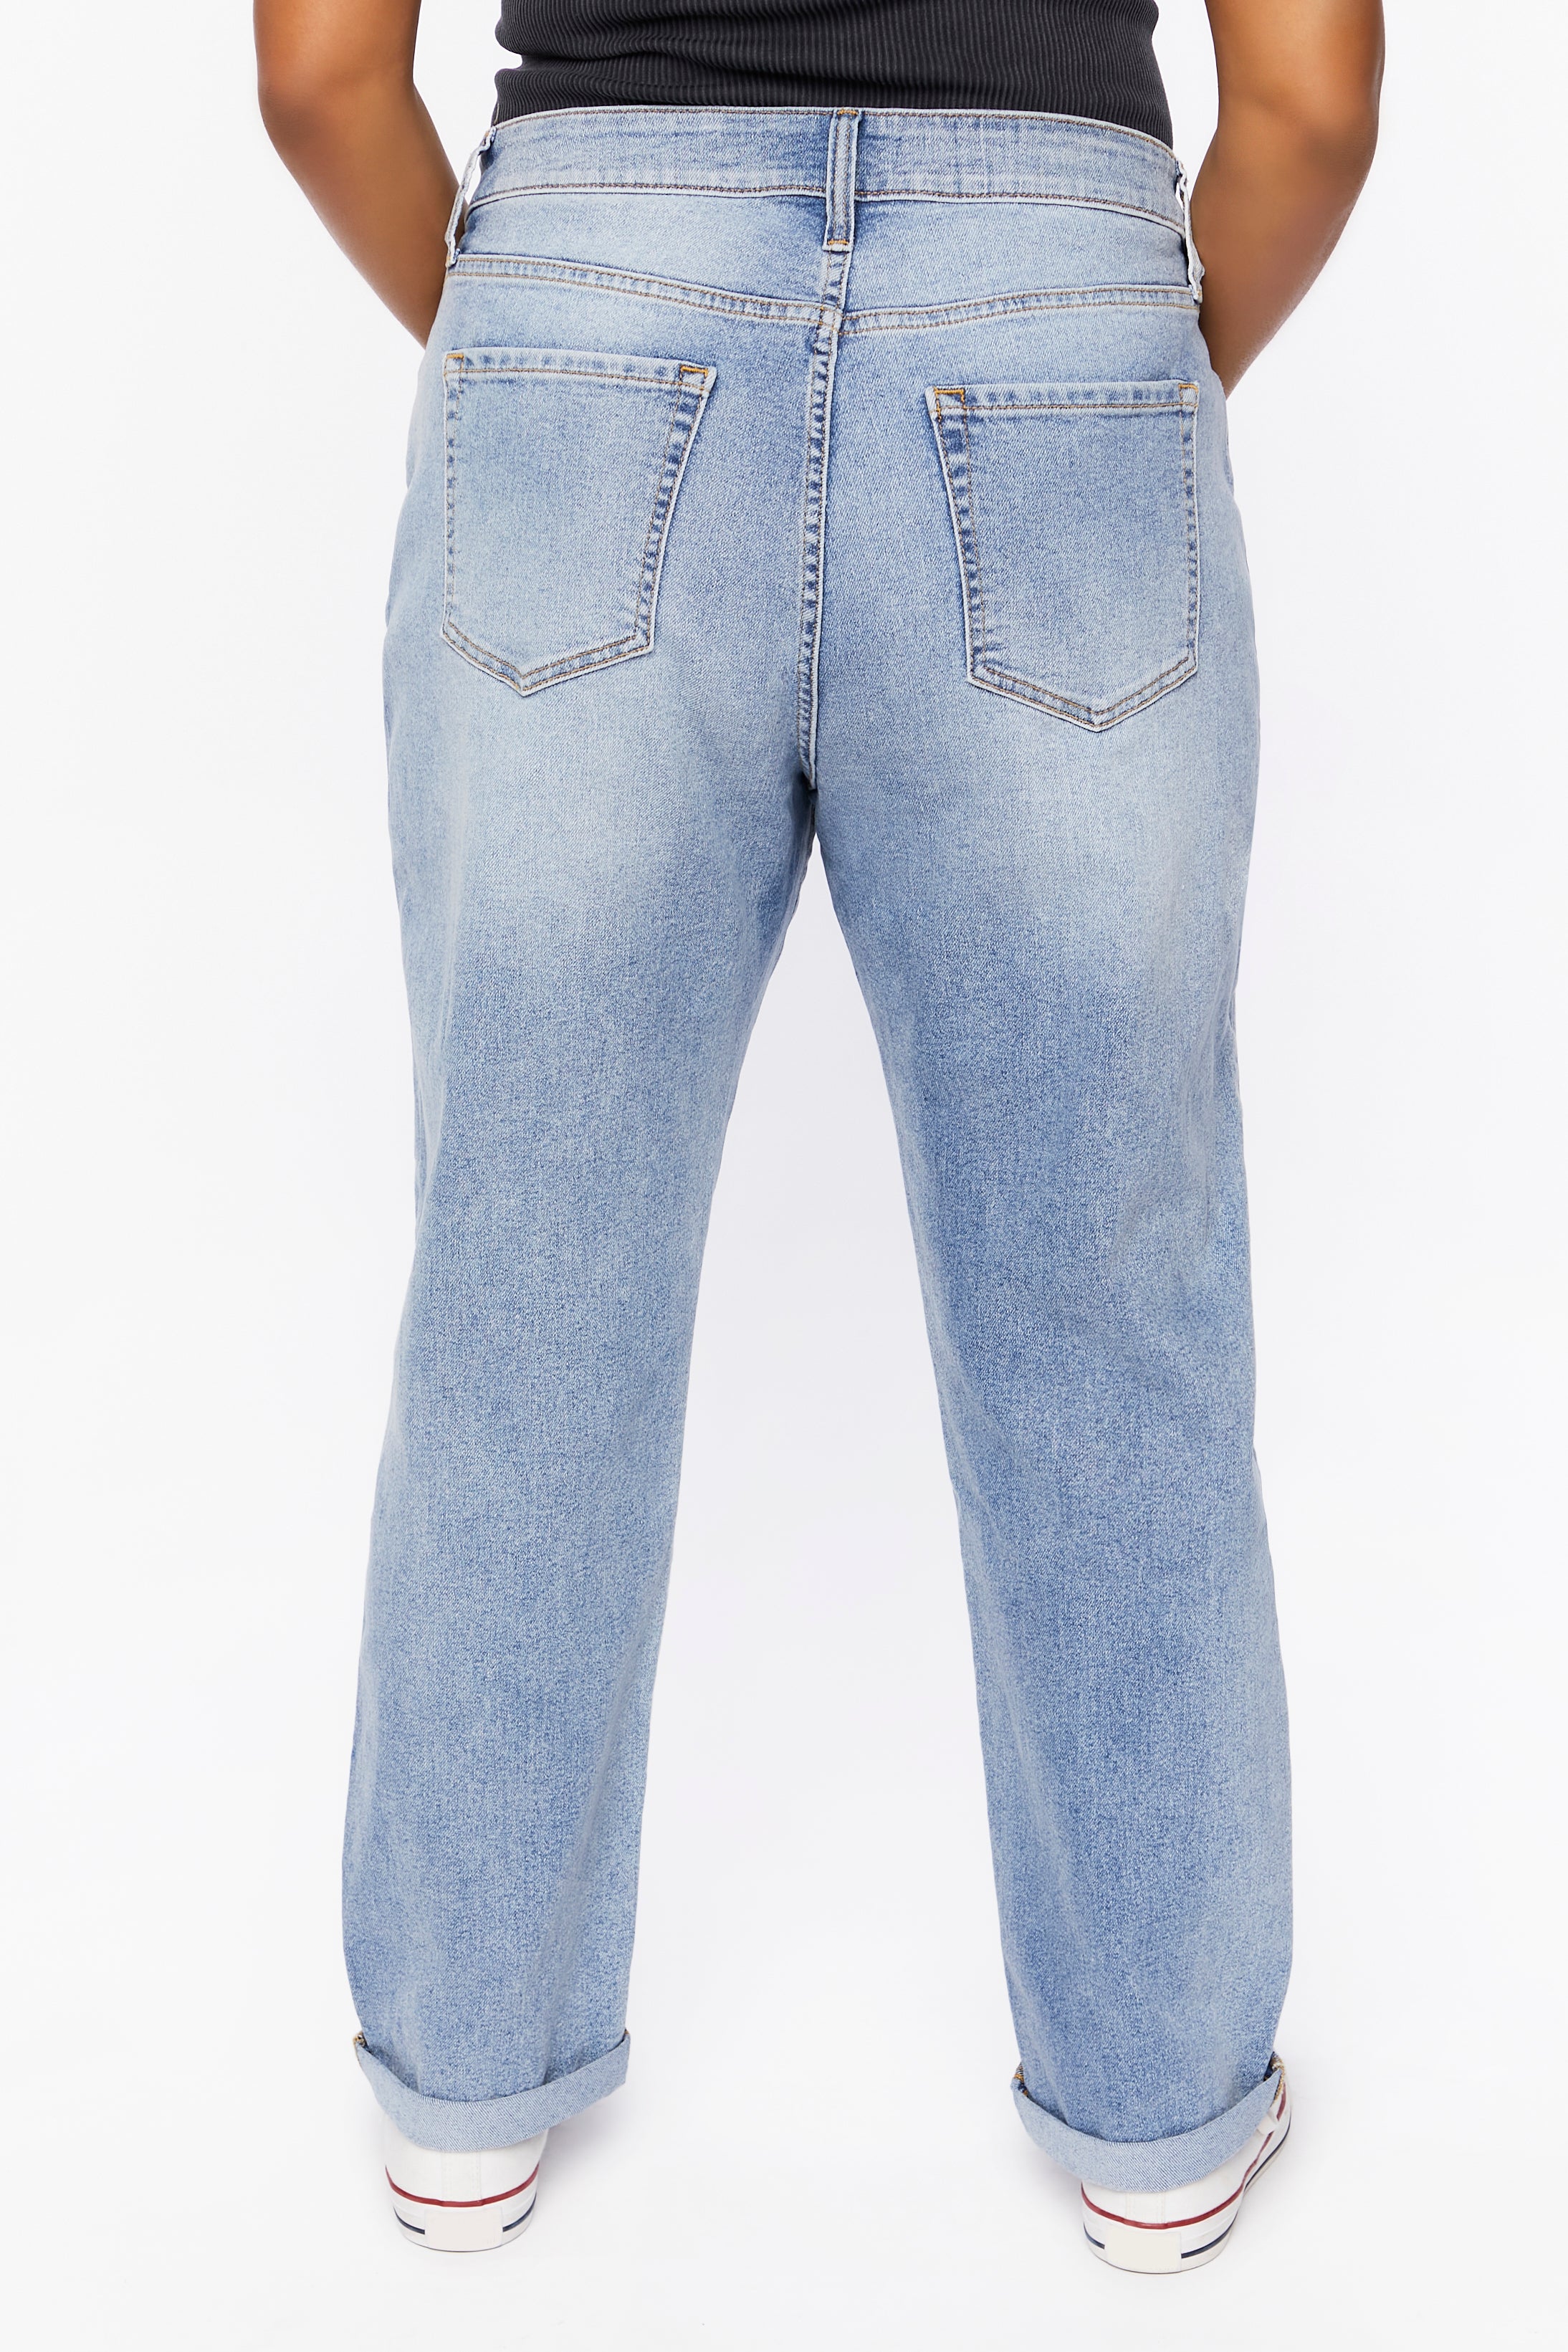 Mediumdenim Plus Size Distressed Baggy Jeans 3